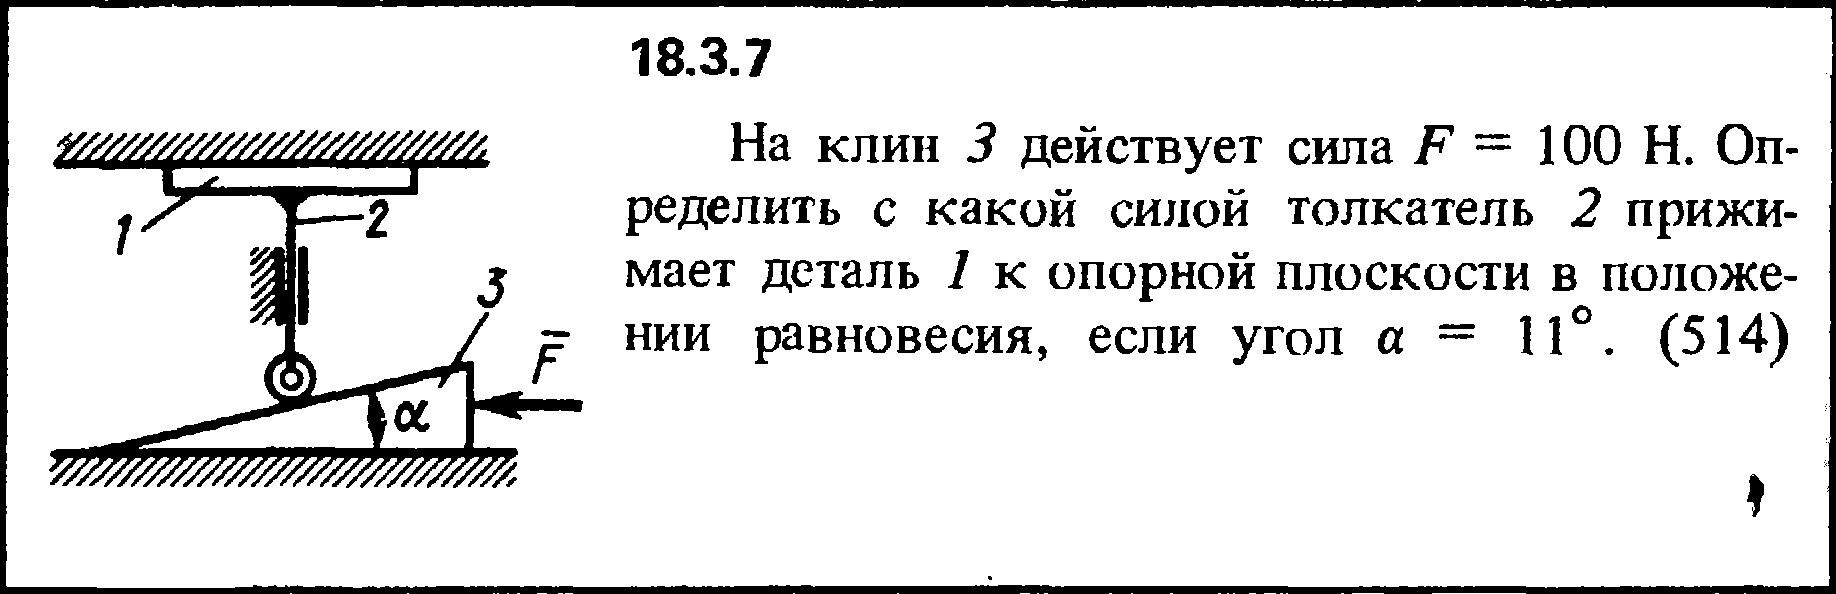 Решение 18.3.7 из сборника (решебника) Кепе О.Е. 1989